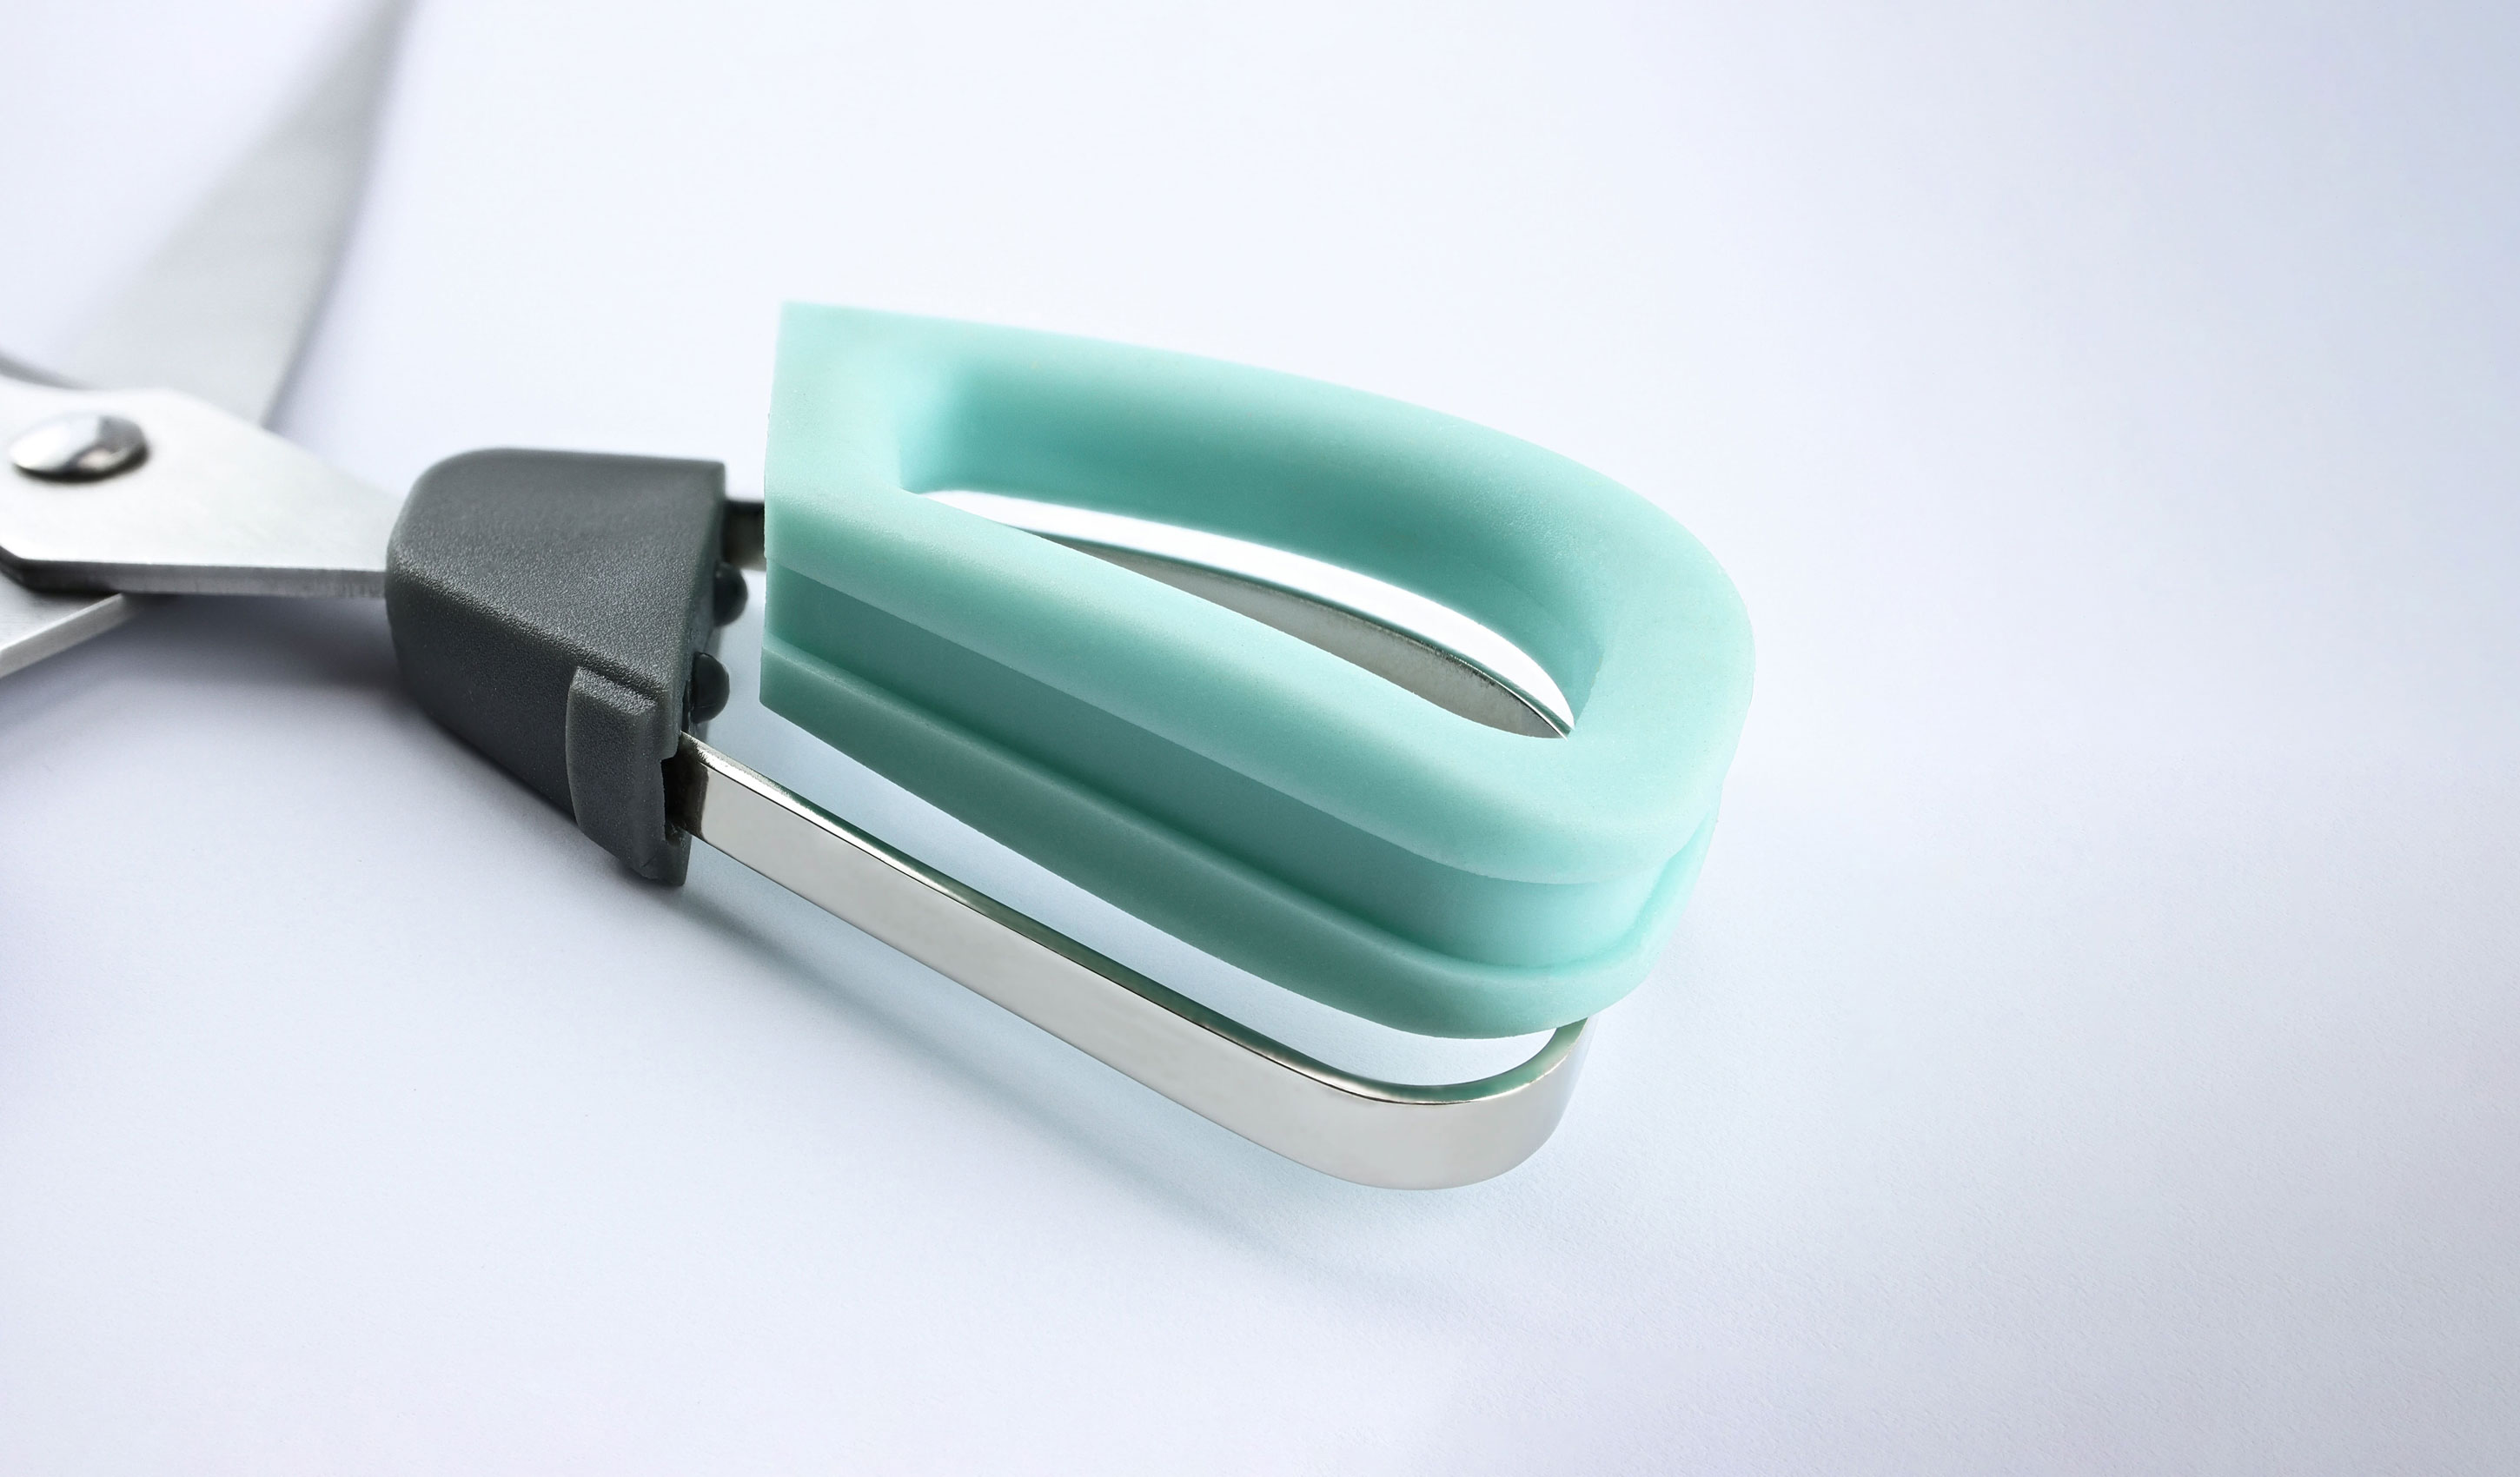 clip it, designed by Michael Satz (Sentisina GmbH)